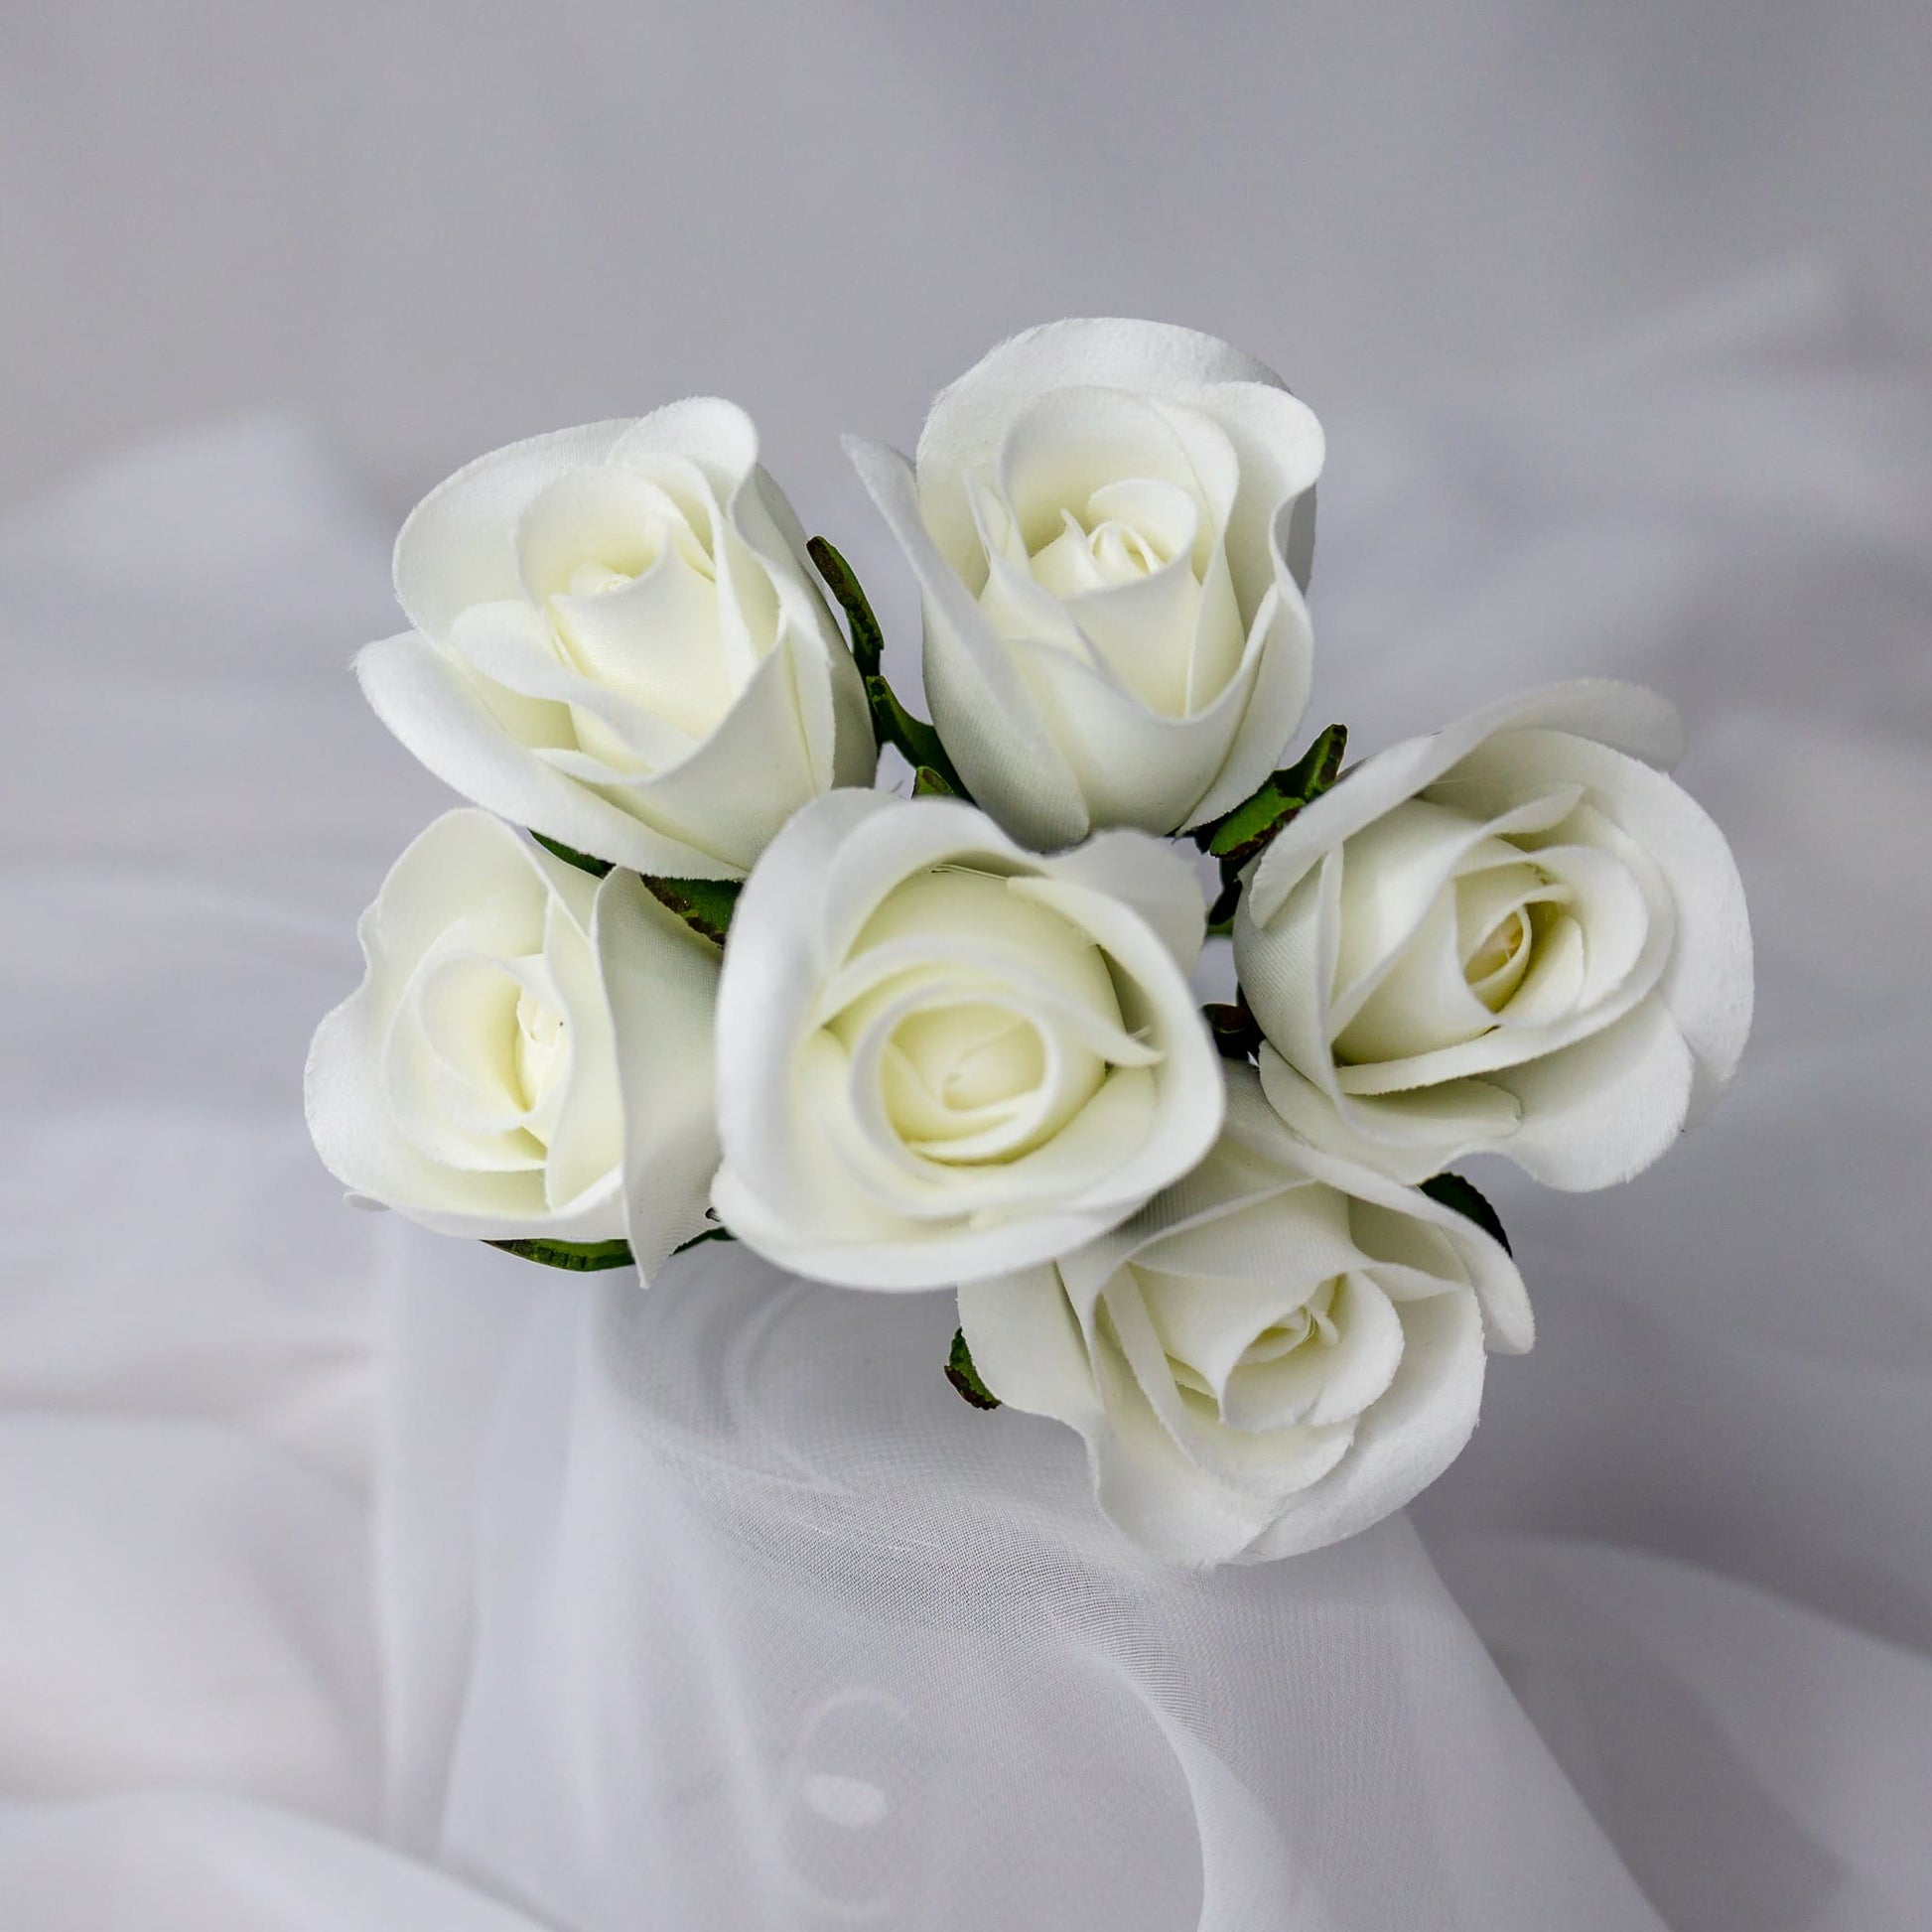 artificial white velveeten rose buds top view